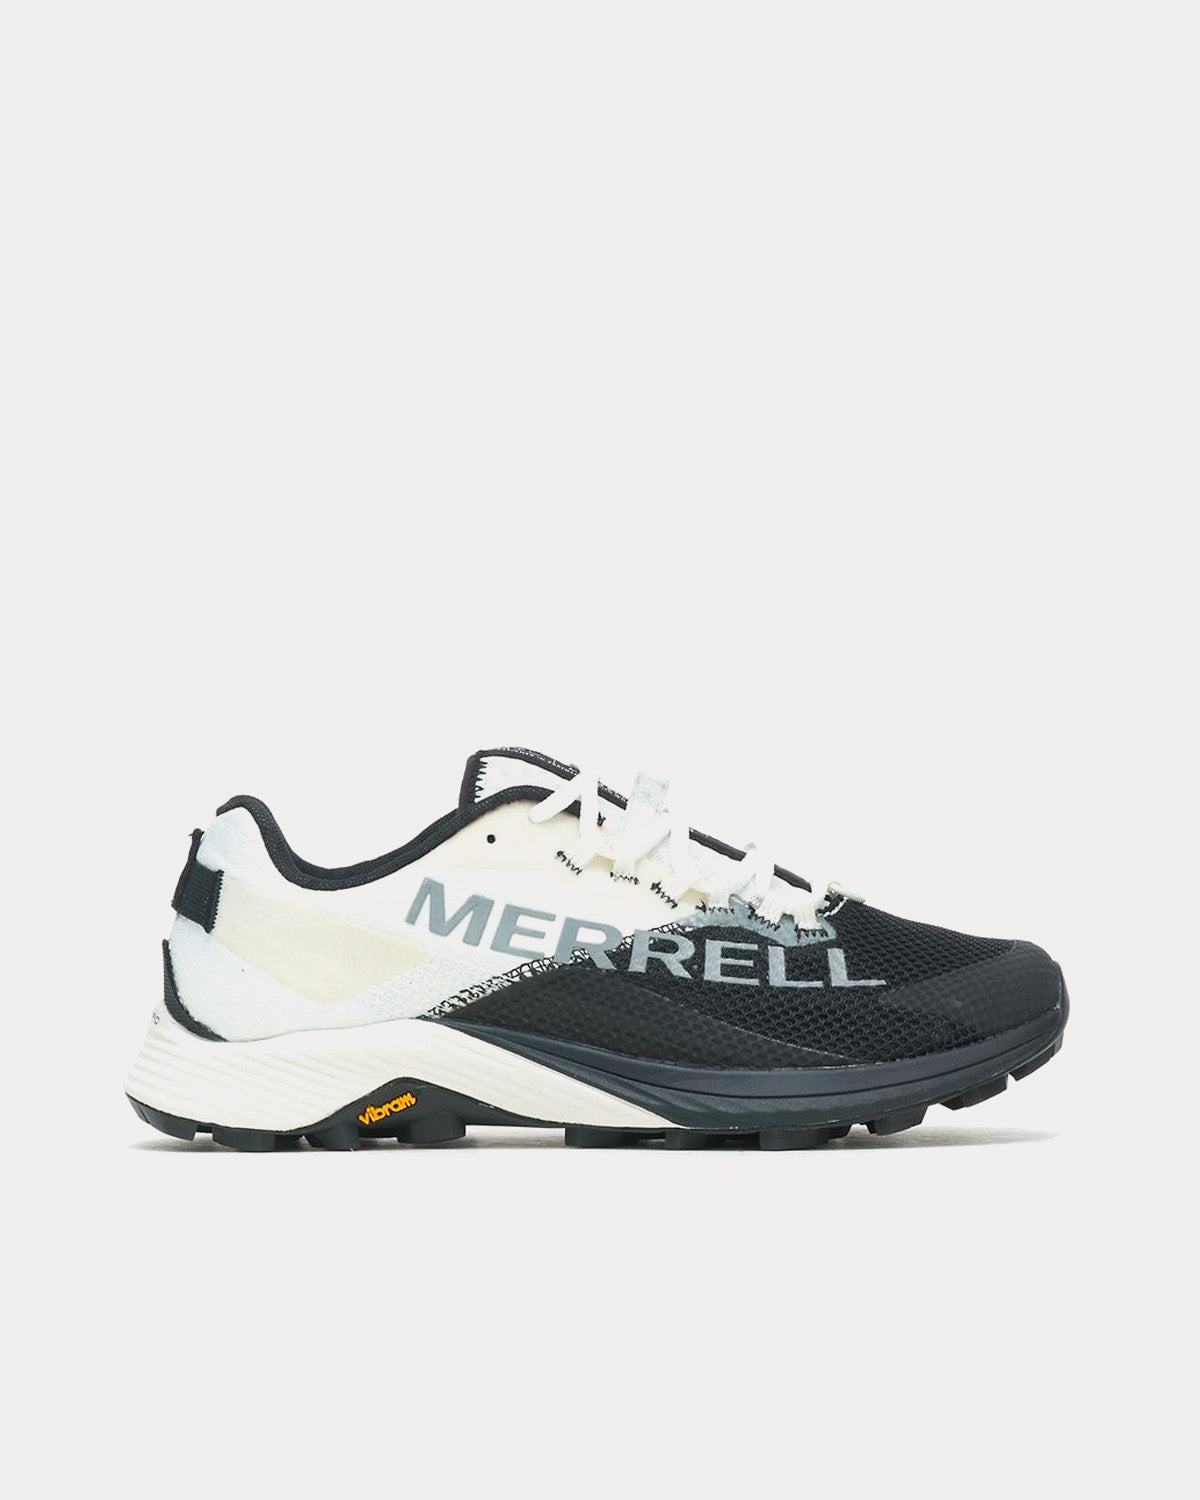 Merrell MTL Long 2 Black White Running Shoes - Sneak in Peace